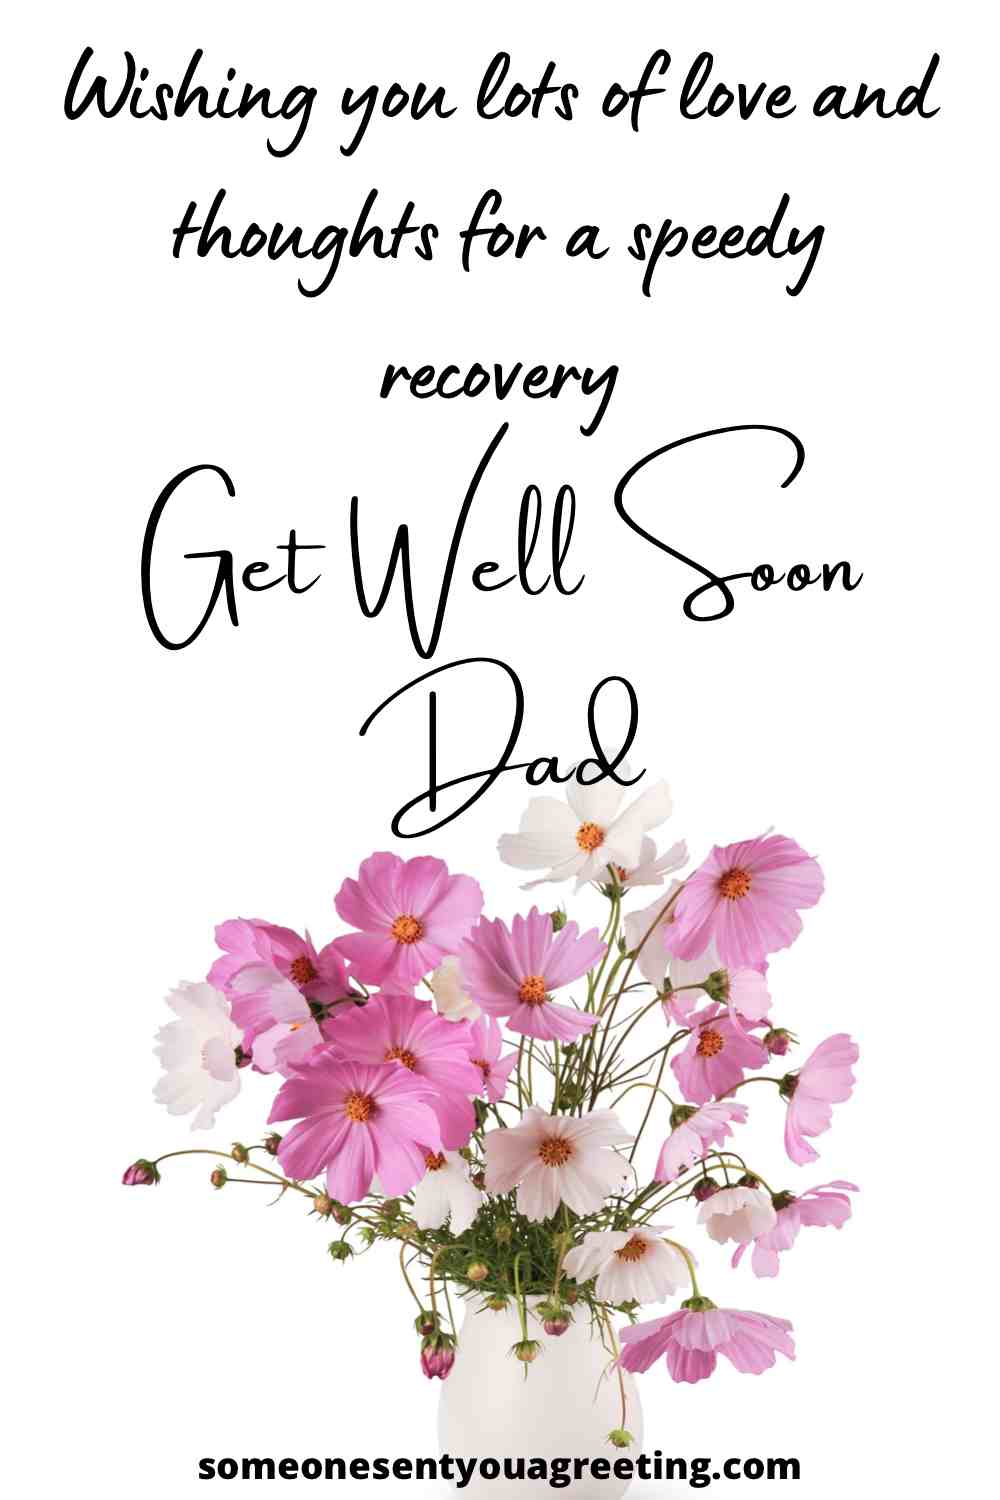 Get well soon dad